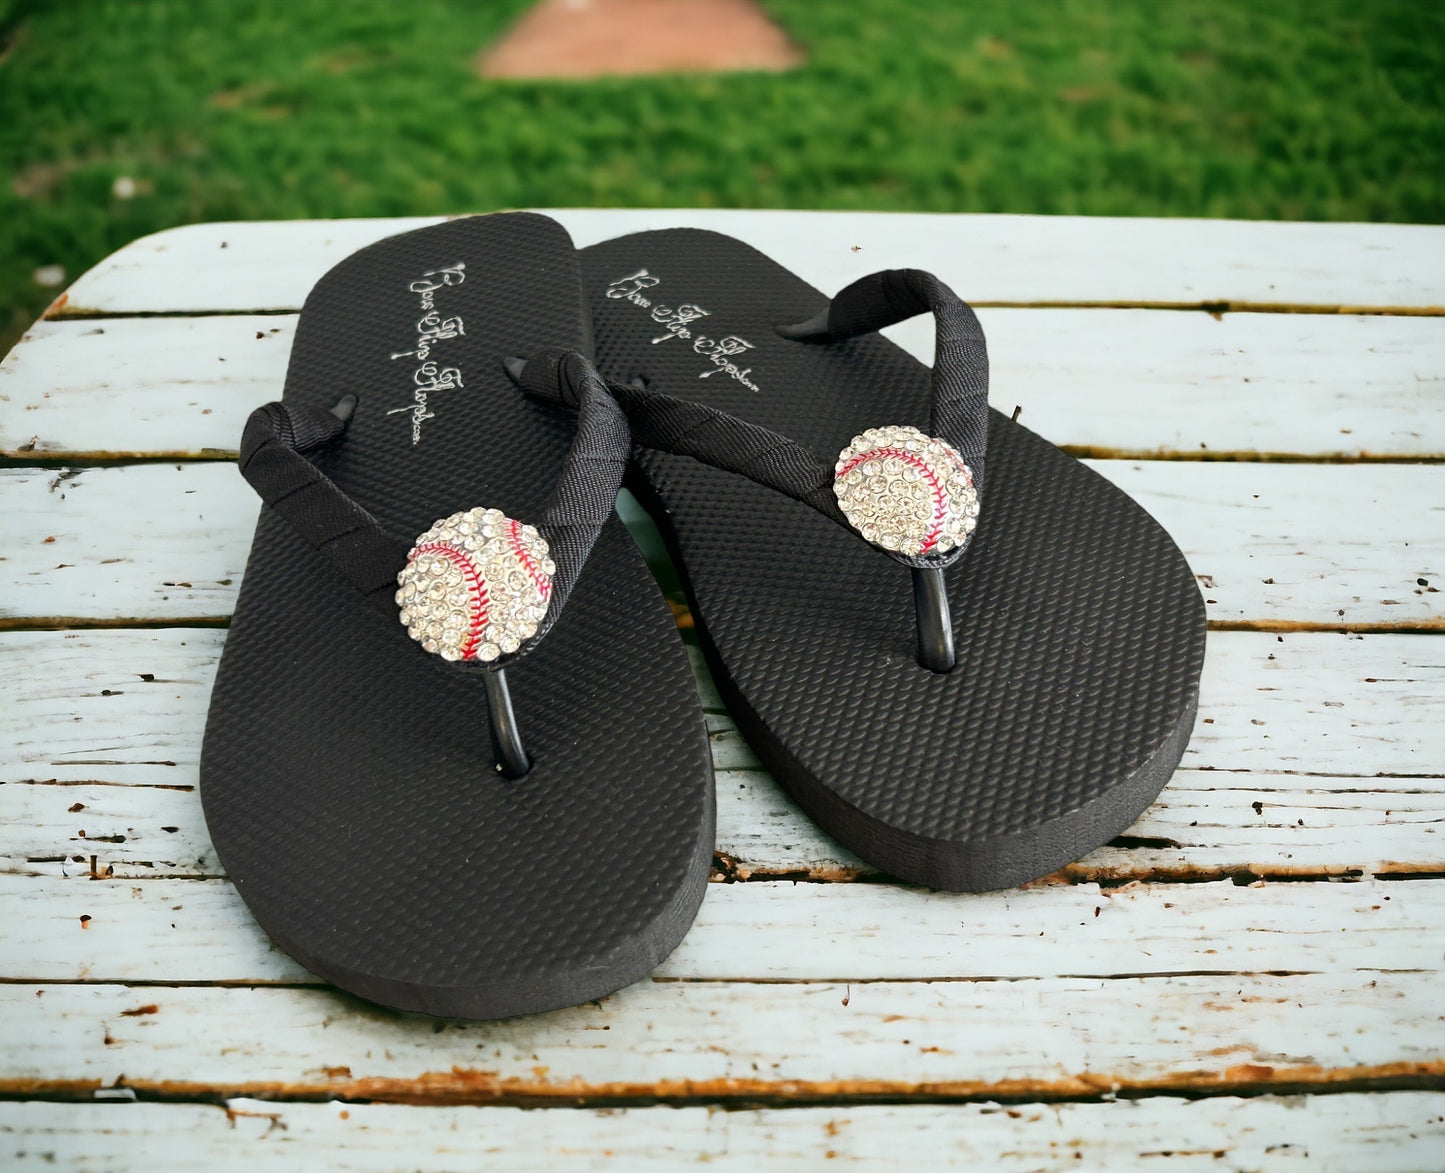 Chevron Baseball Rhinestone Flip Flops for Ladies & Girls Sports Sandals - Customizable